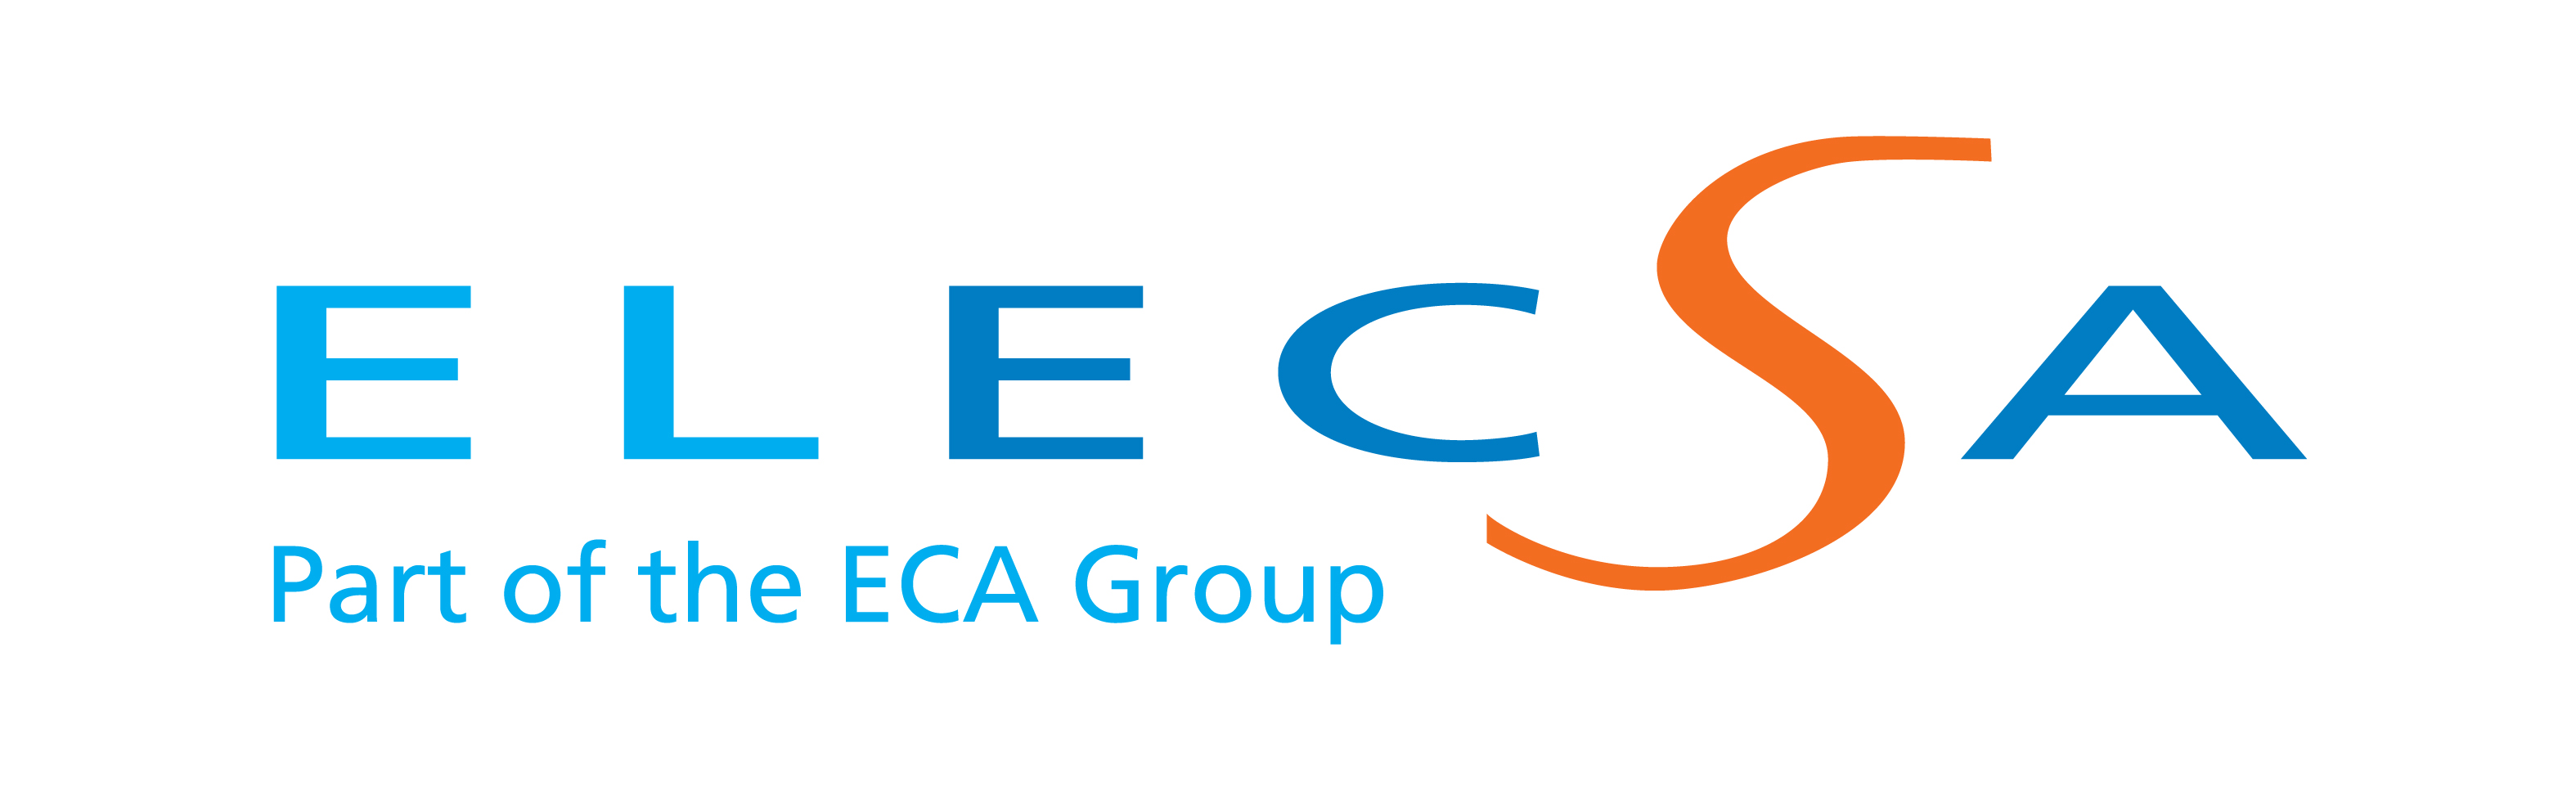 New-Elecsa-logo